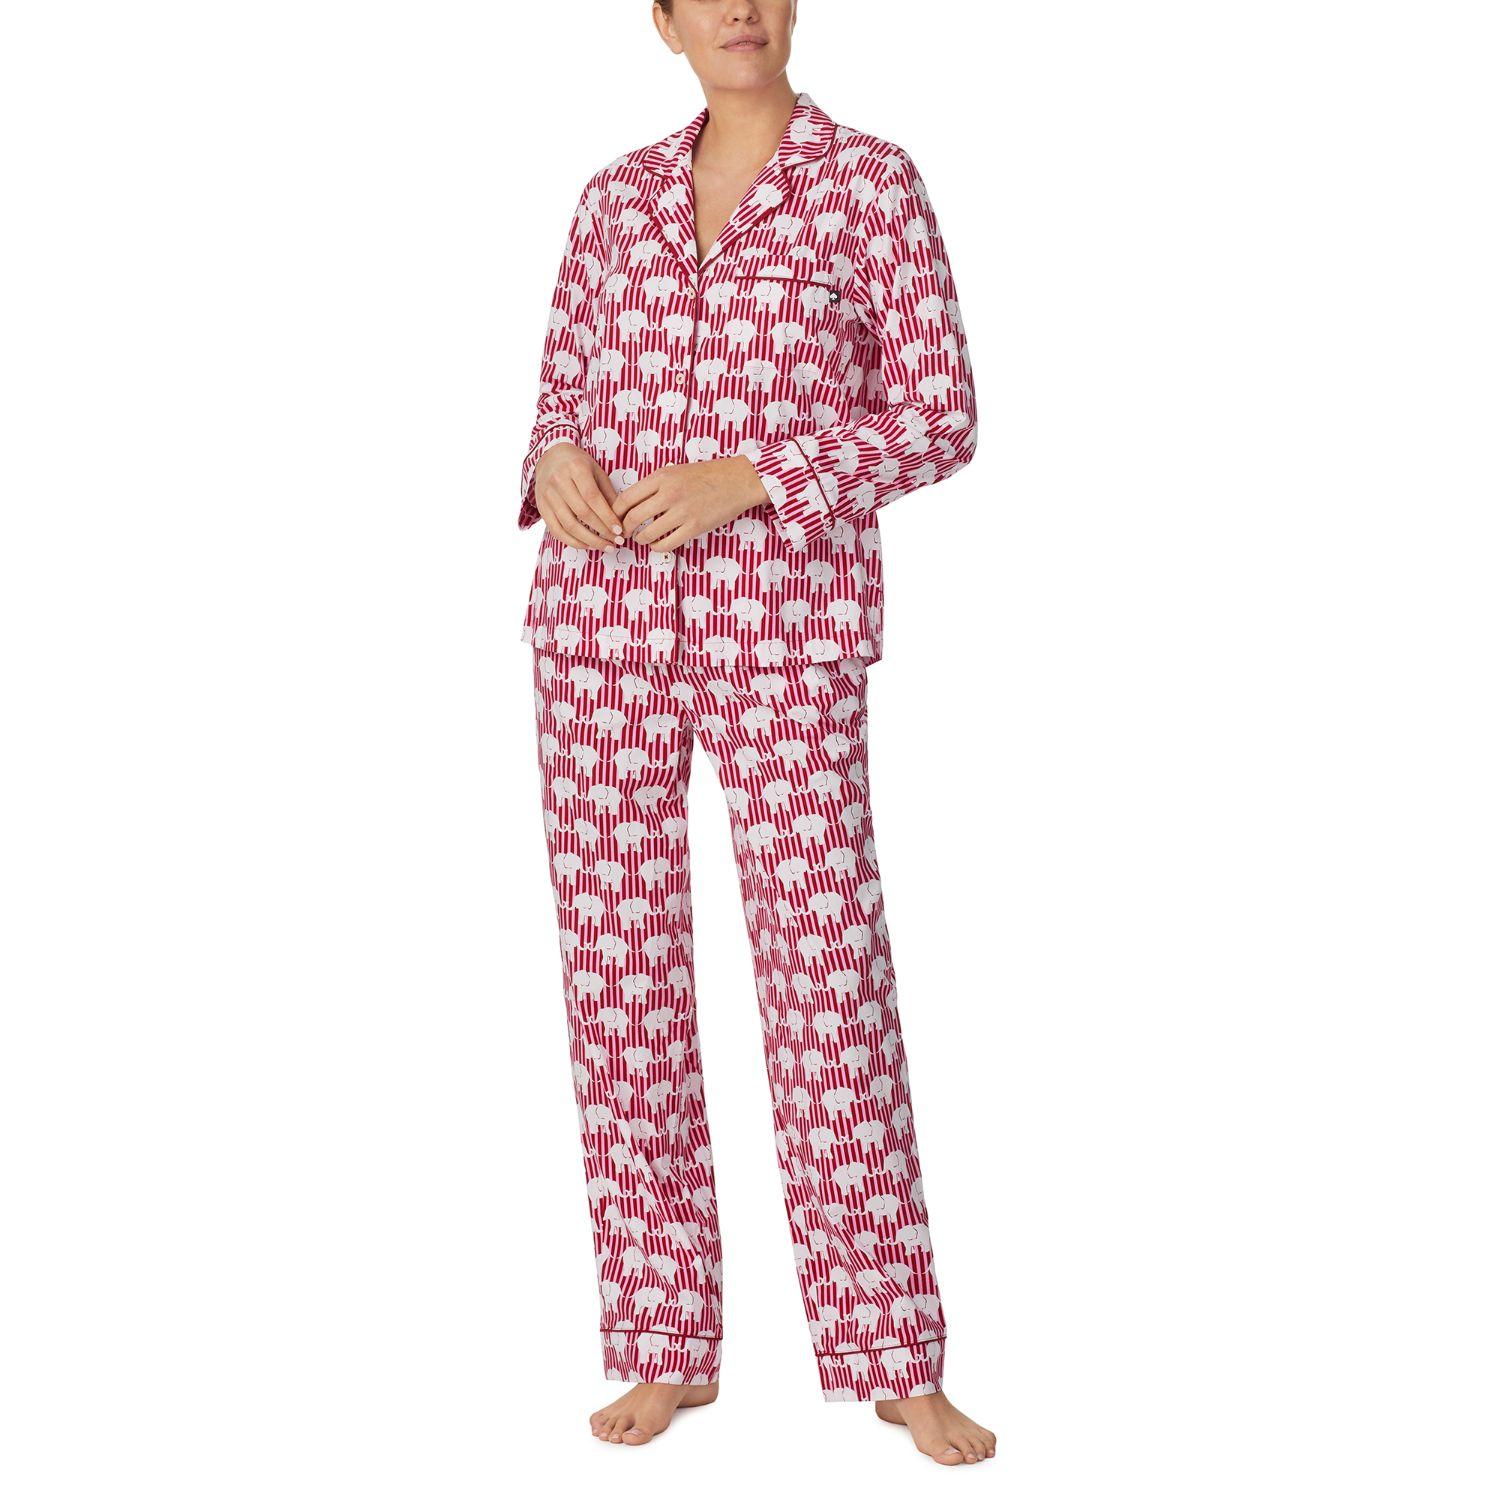 kate-spade-cotton-notch-collar-elephants-pyjamas-in-pink-stripe